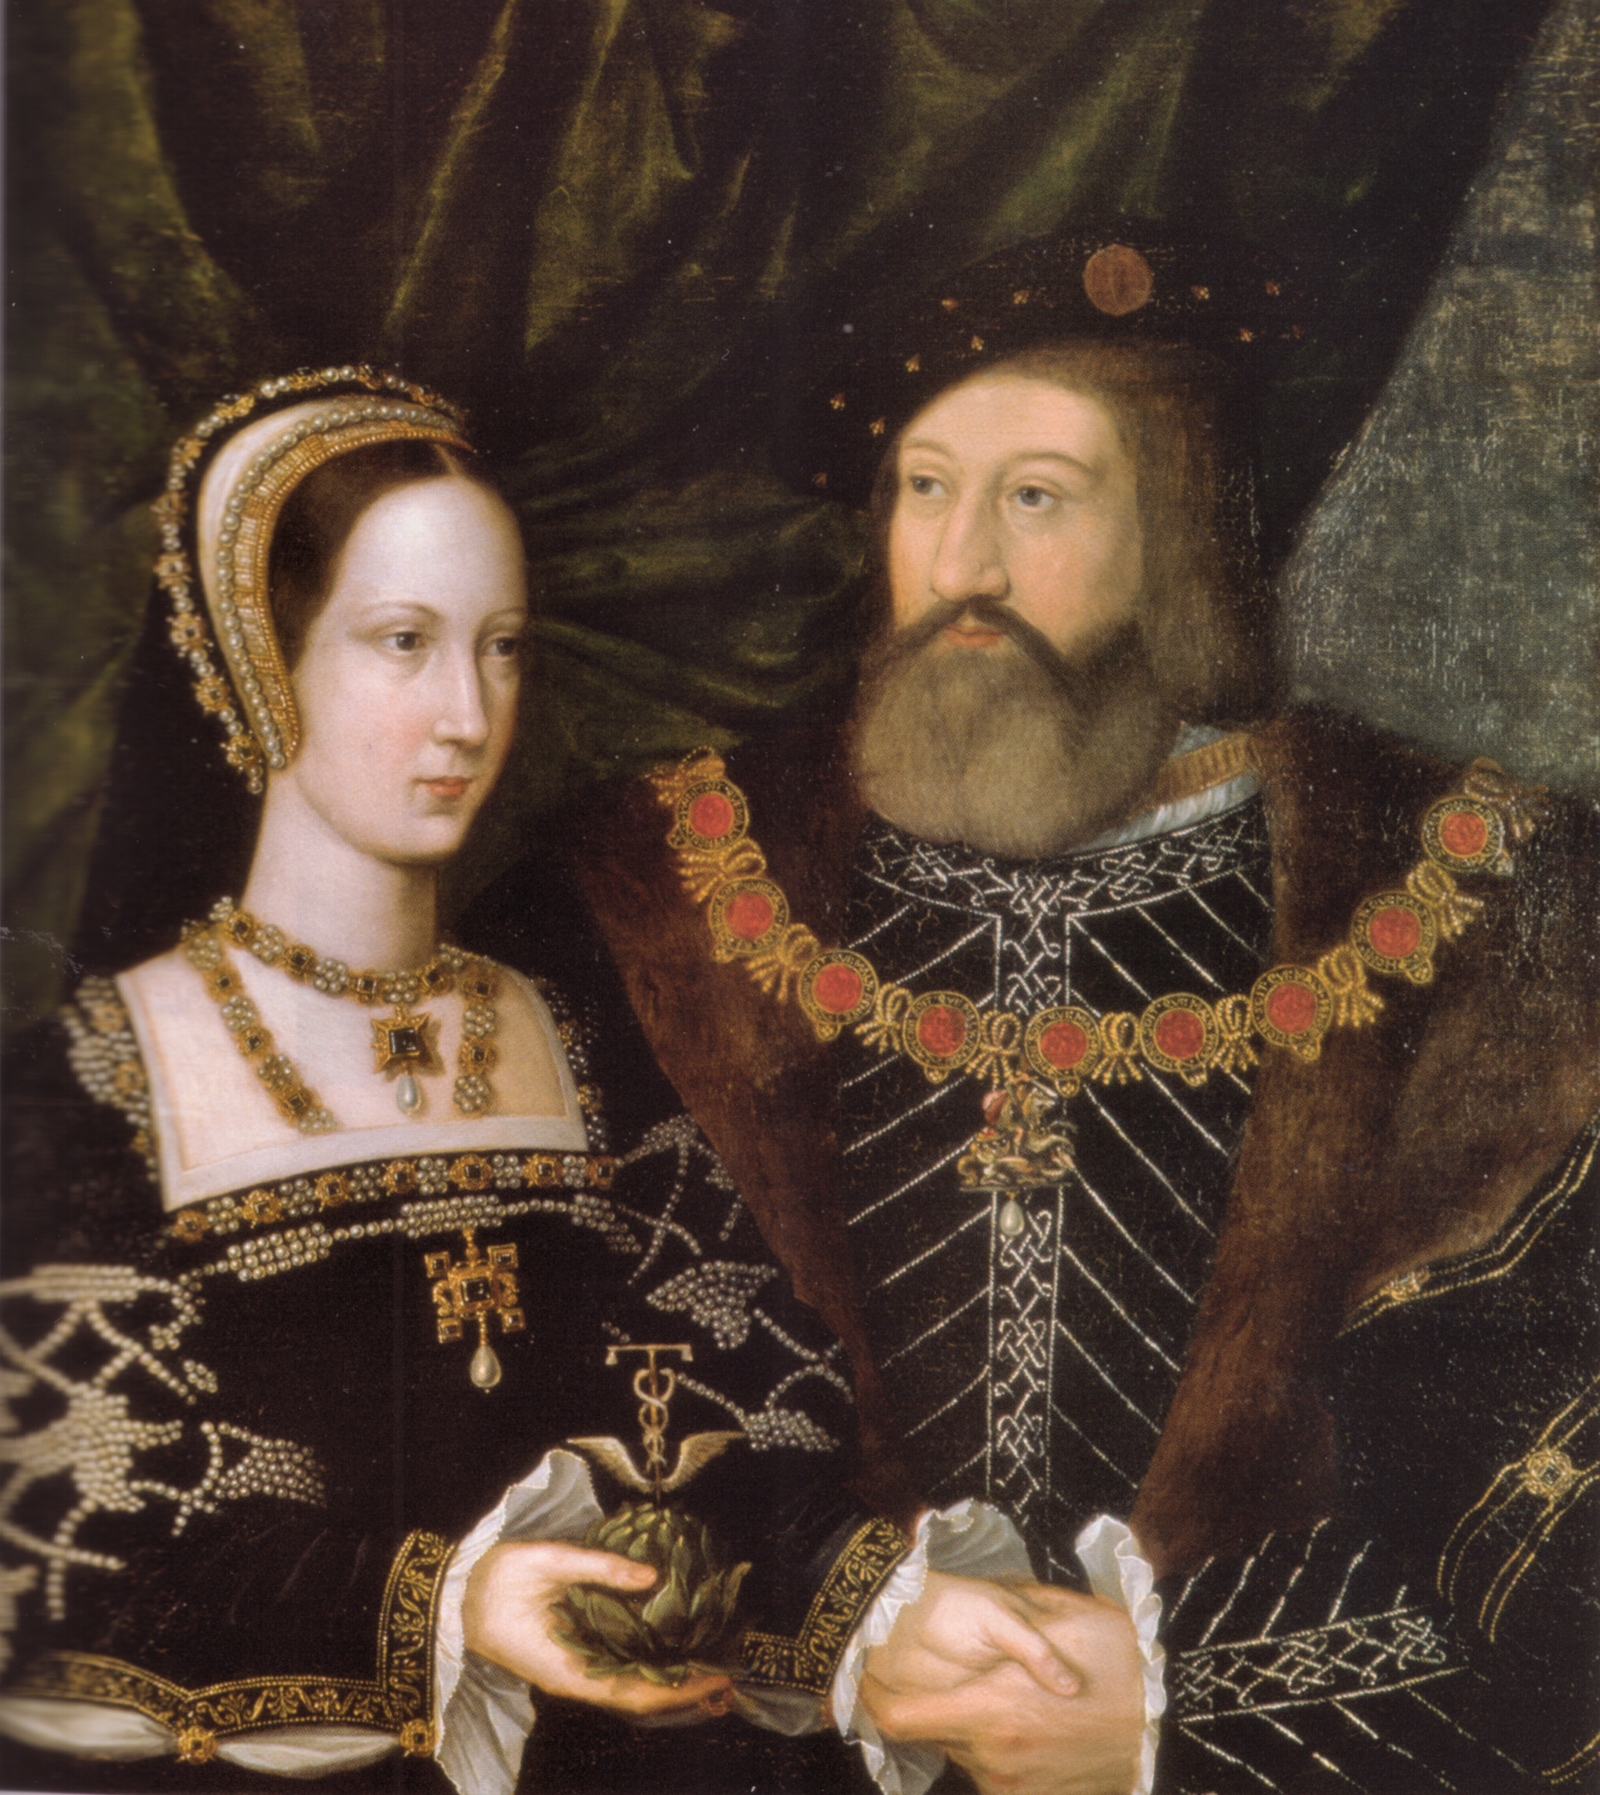 1516 - Princess Mary Tudor and Charles Brandon